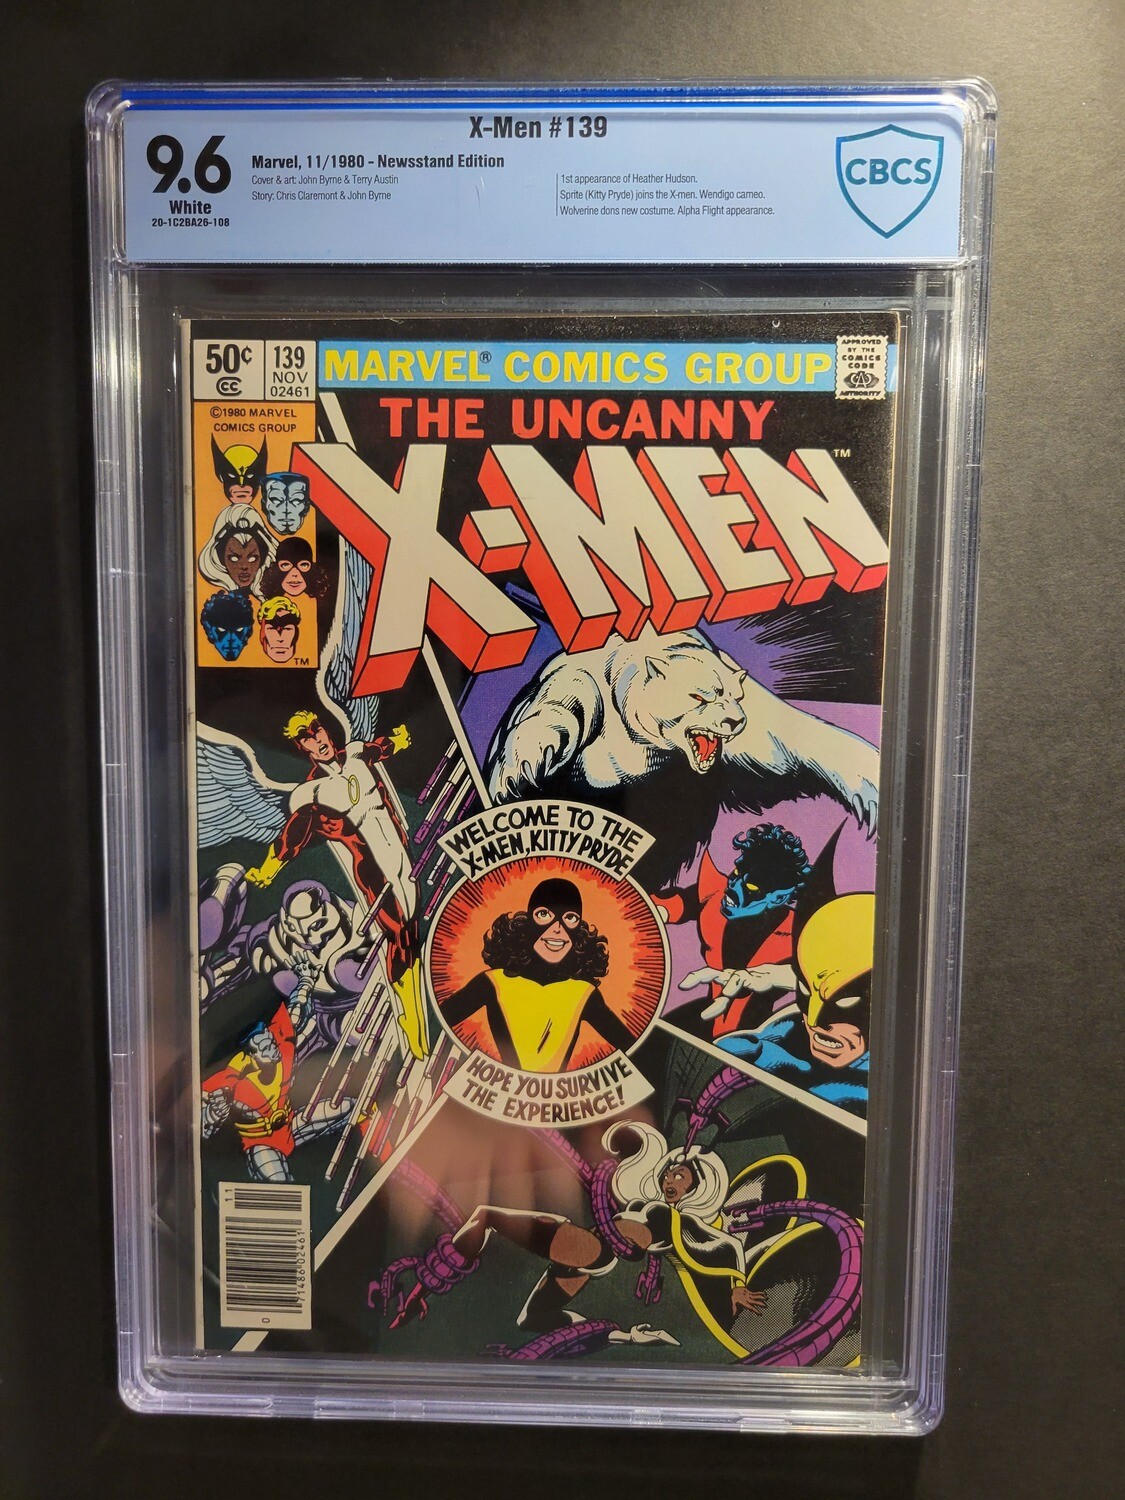 Uncanny X-Men #139 CBCS 9.6 Newsstand Kitty Pryde joins the X-Men